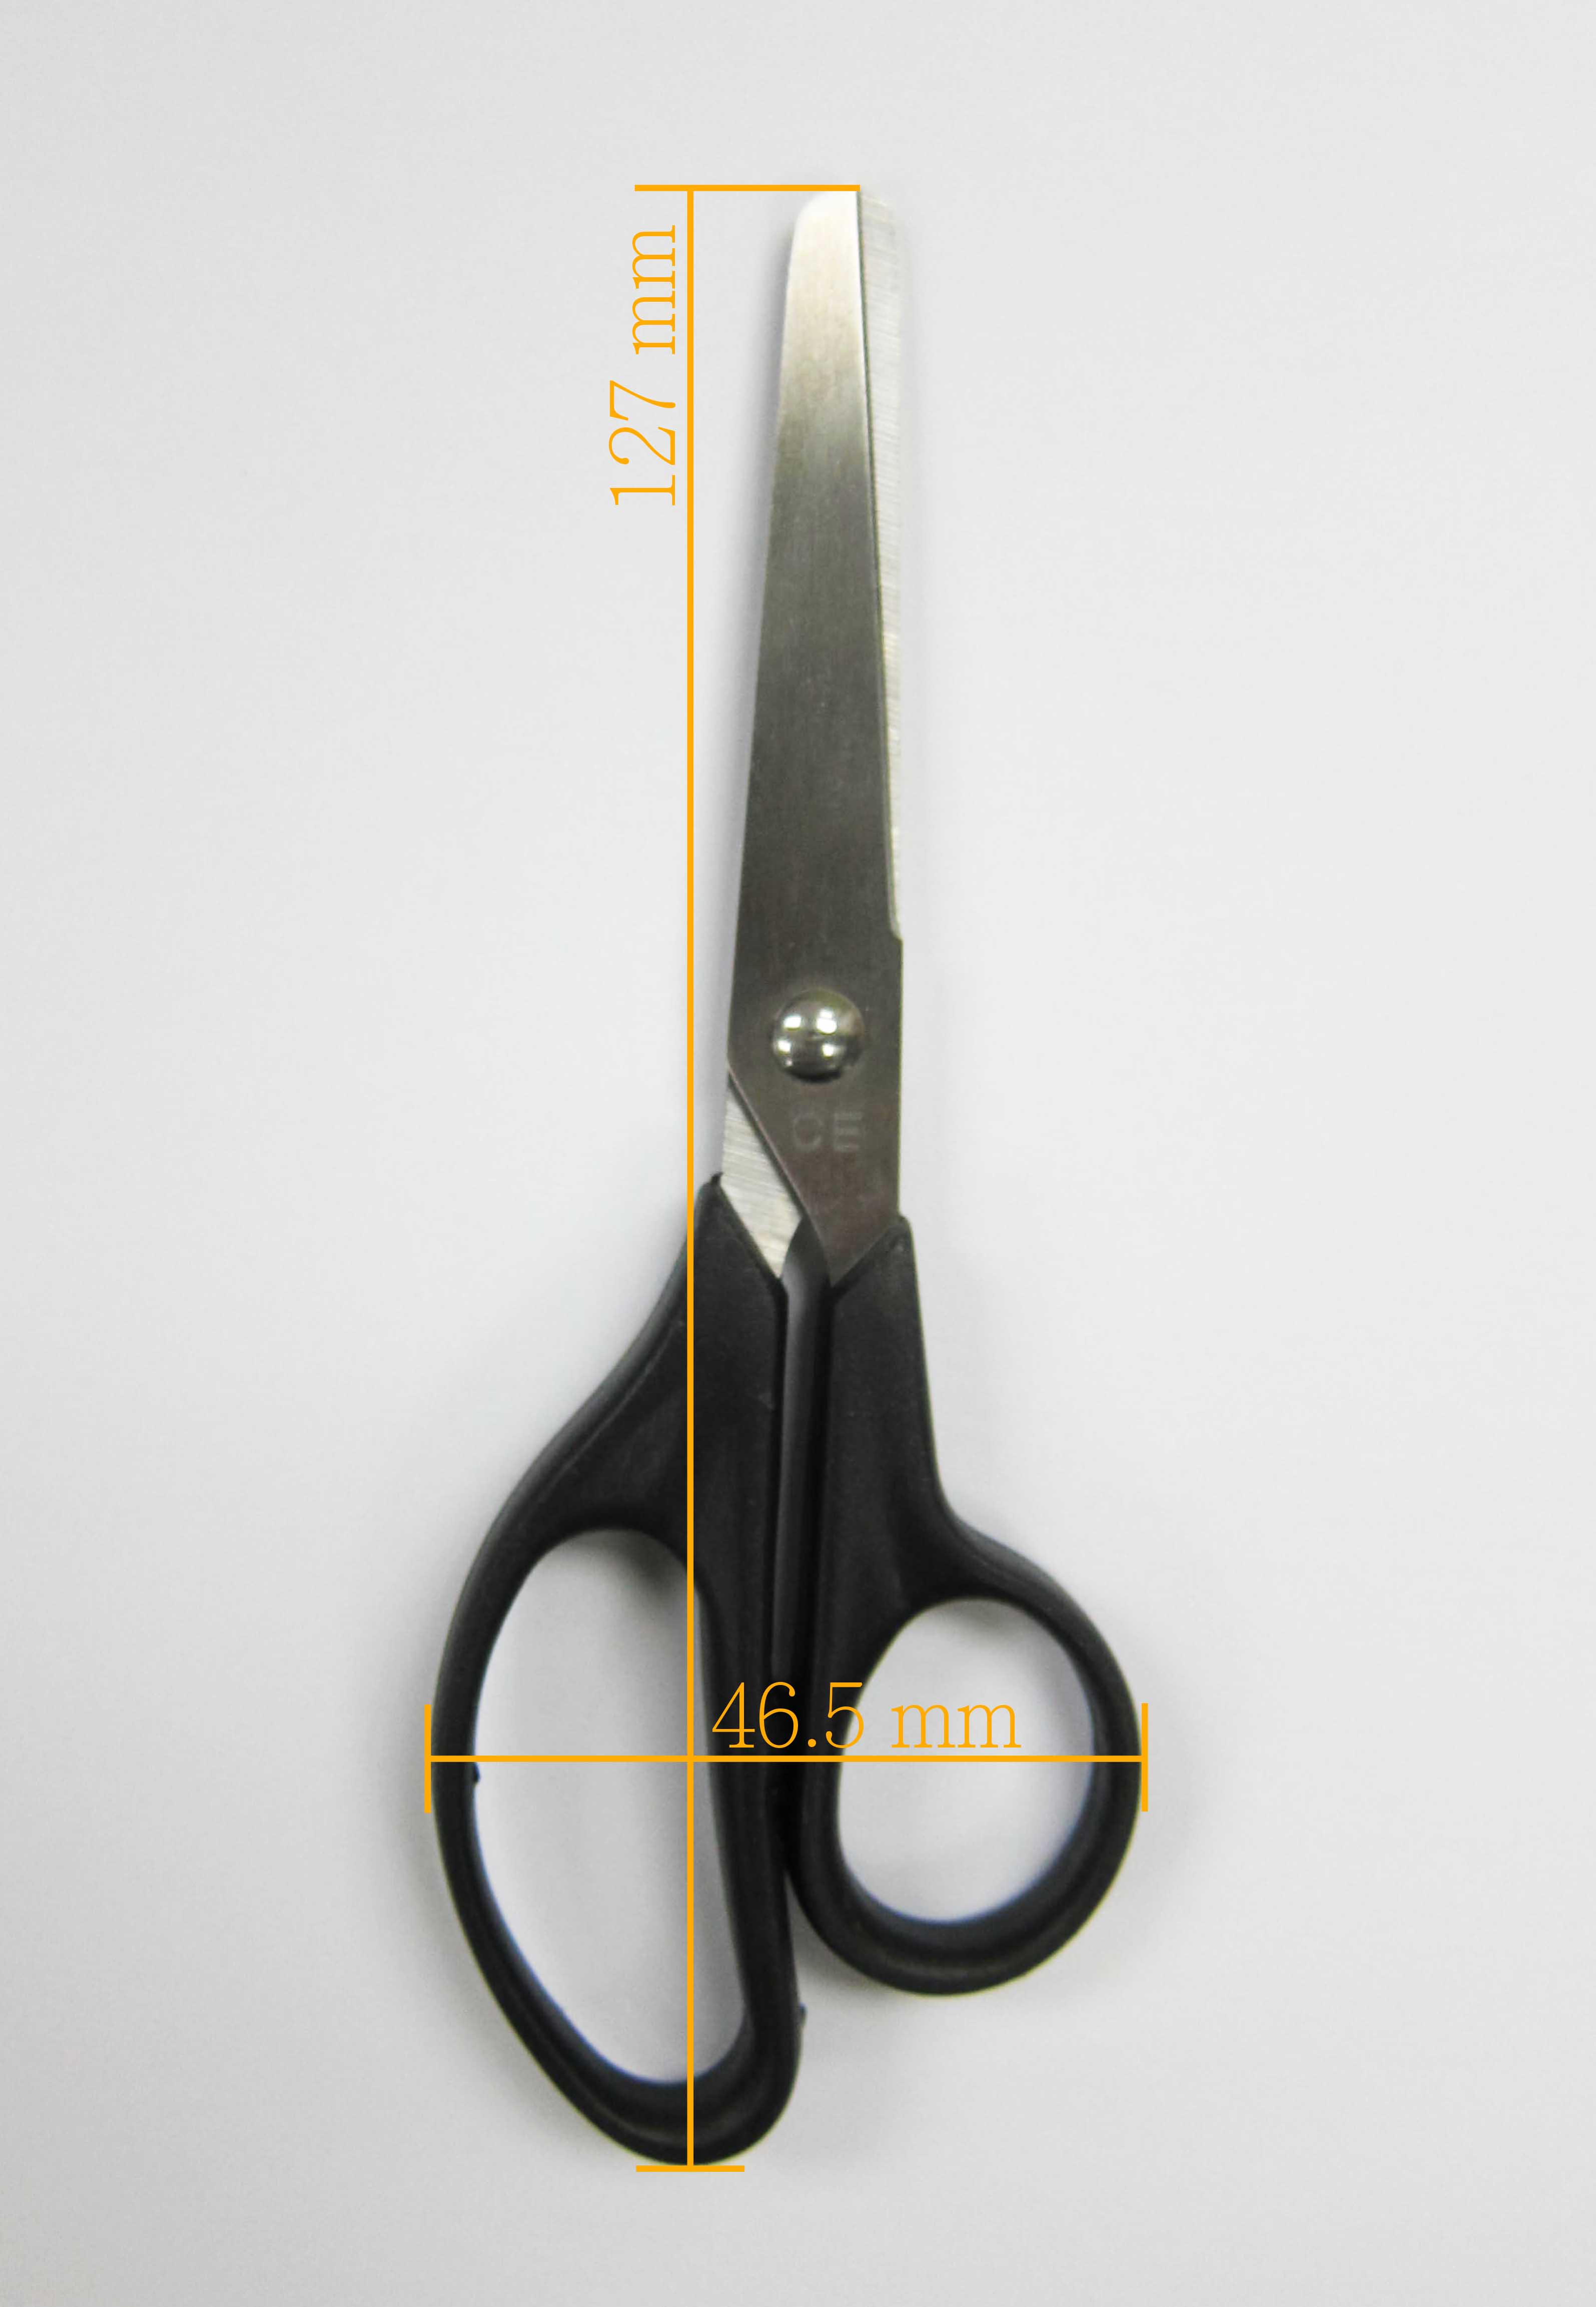 Disposable Medical Scissors.jpg